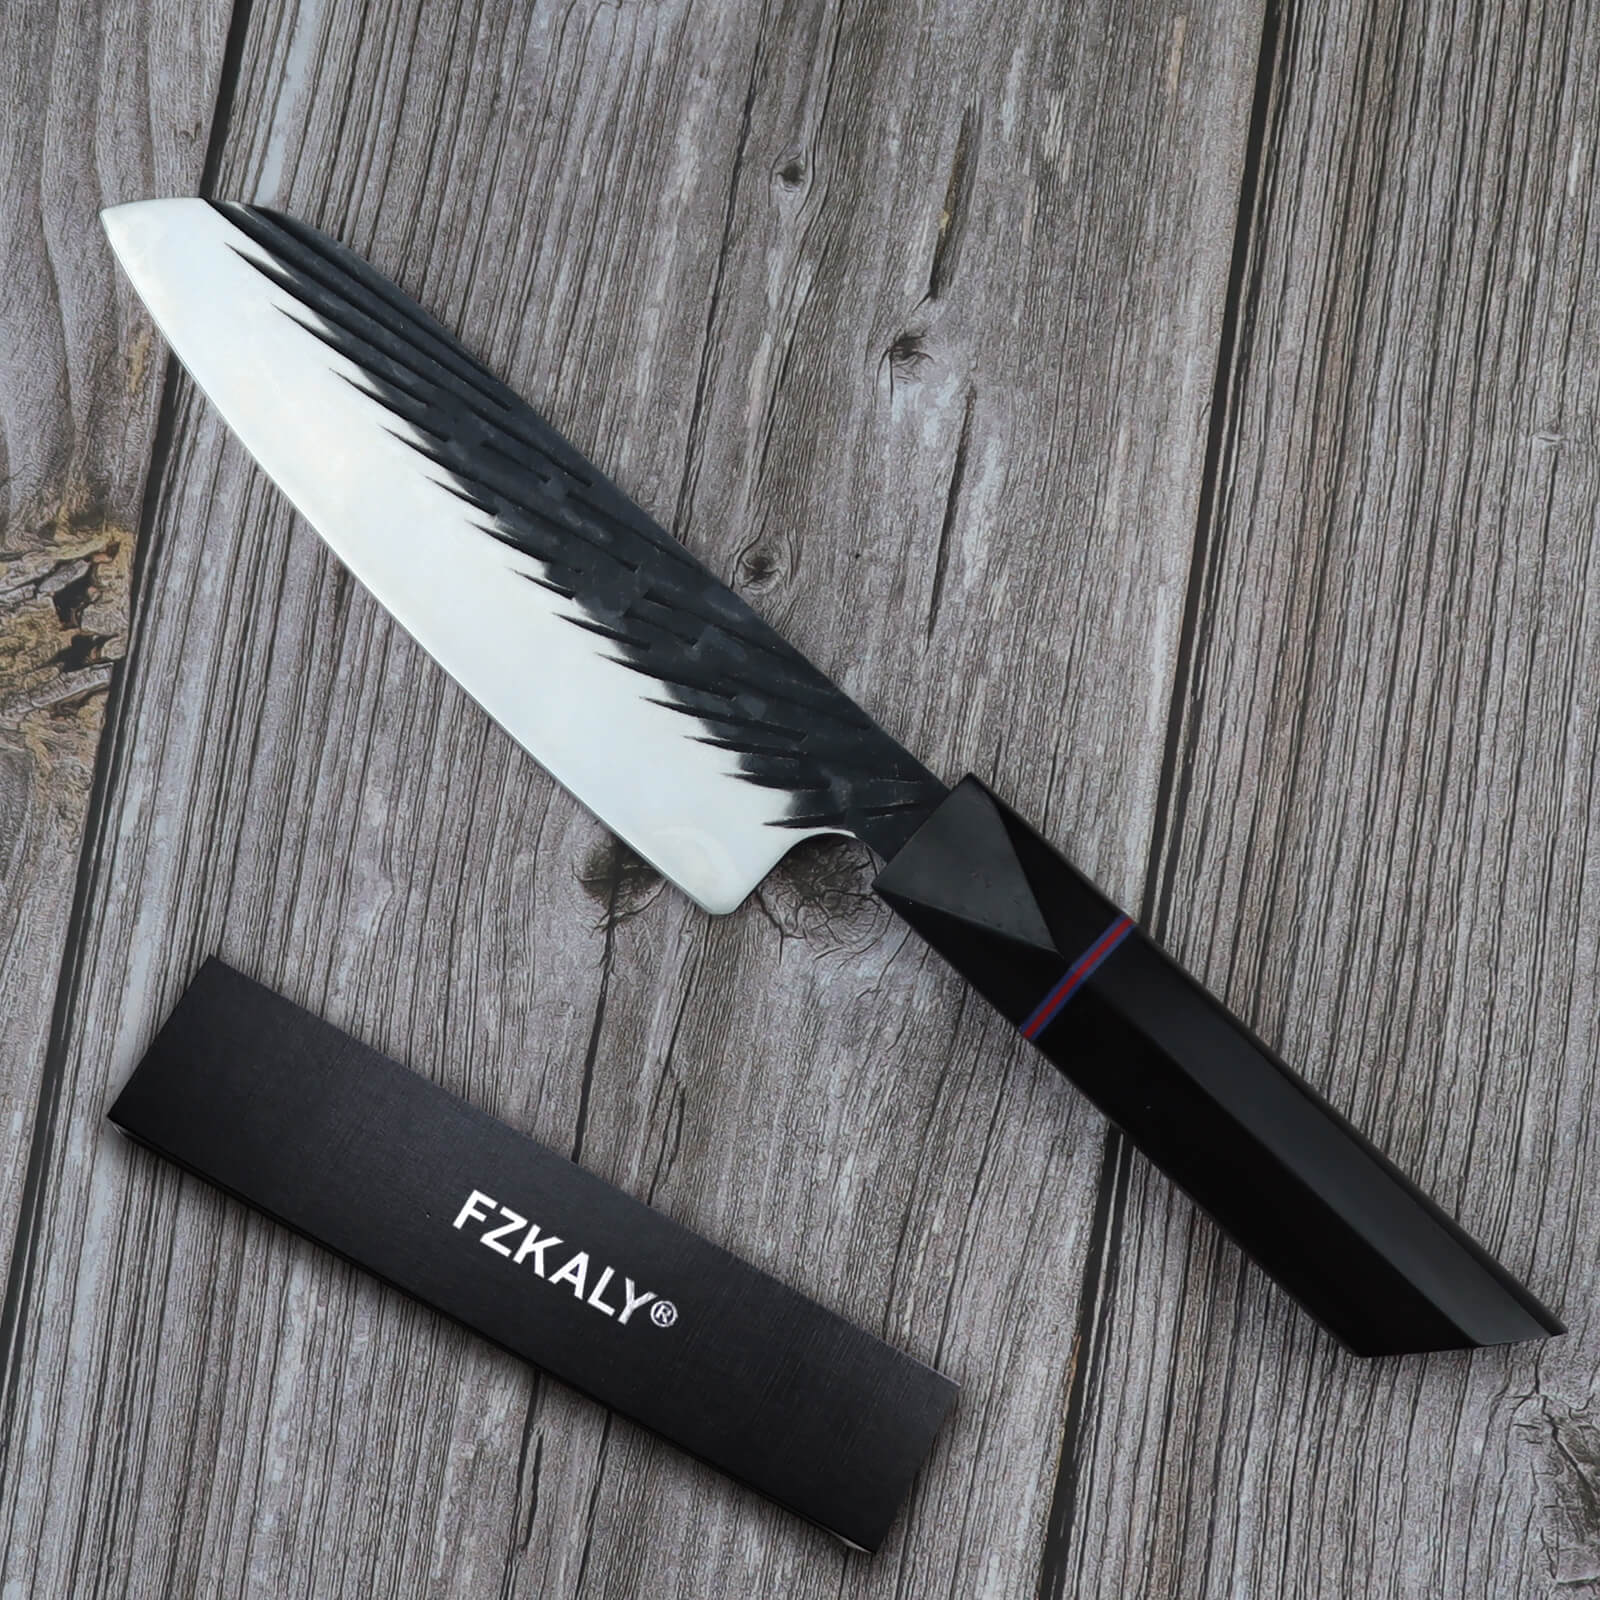 Fzkaly Japanese Santoku Knife 6.5"